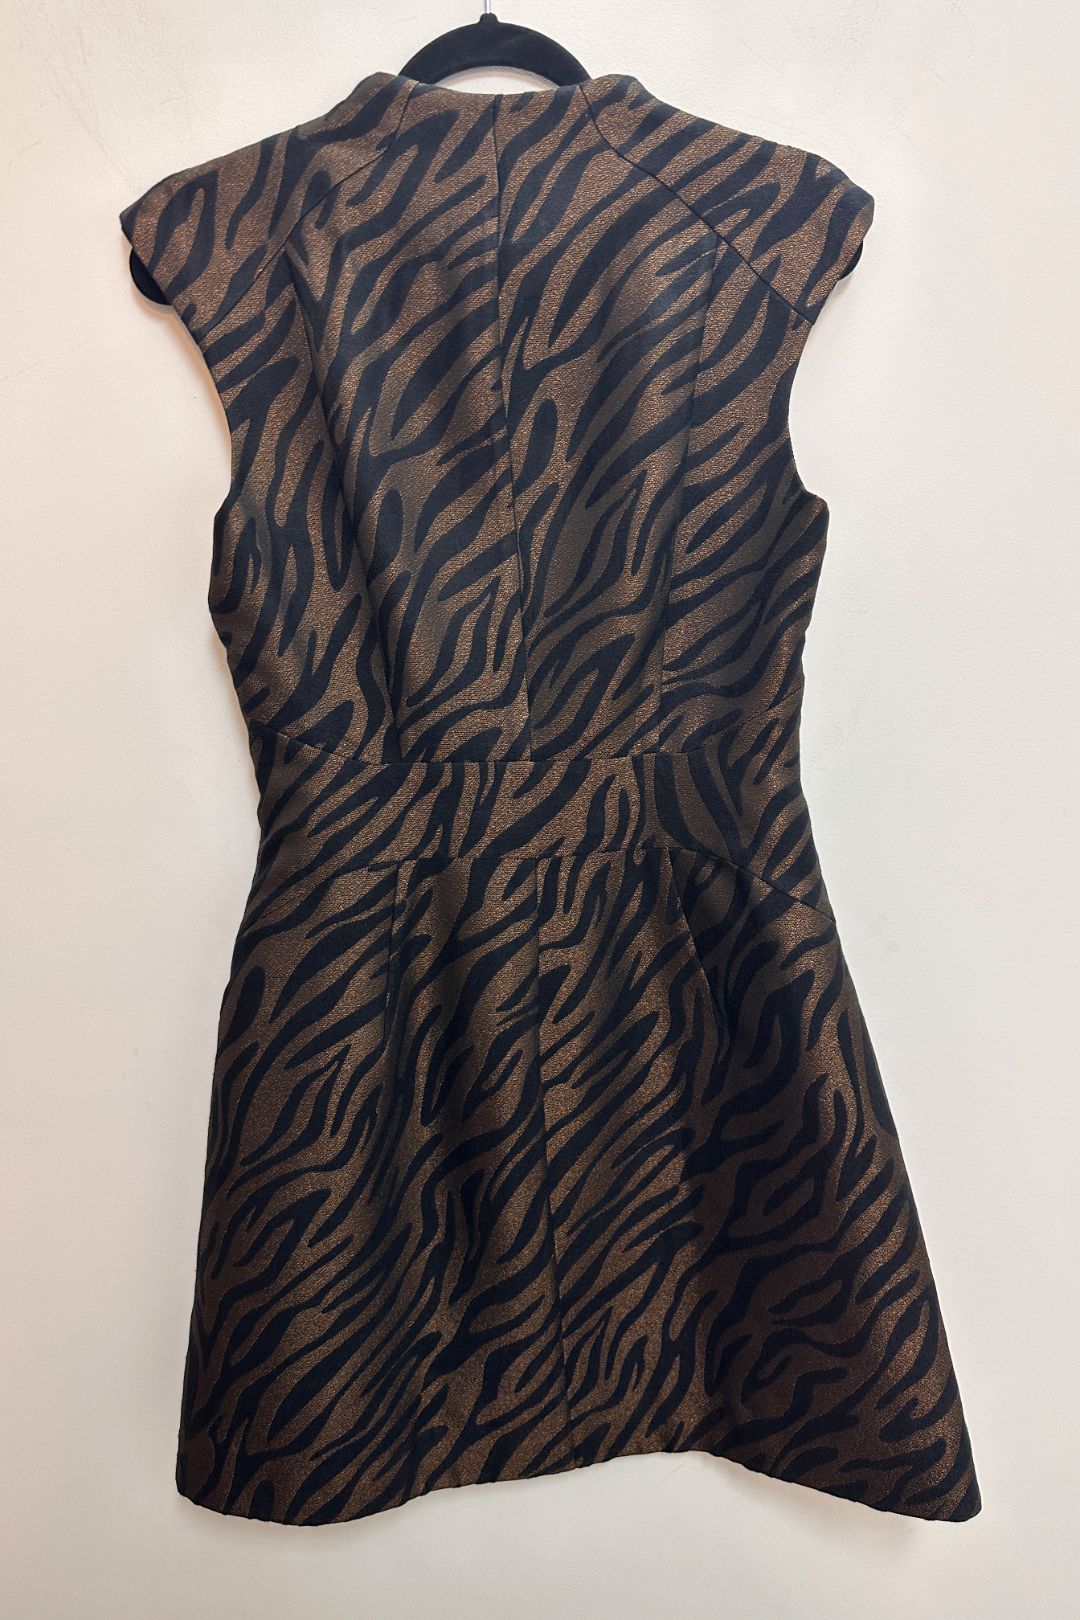 Cue Bronze Zebra Jacquard Dress